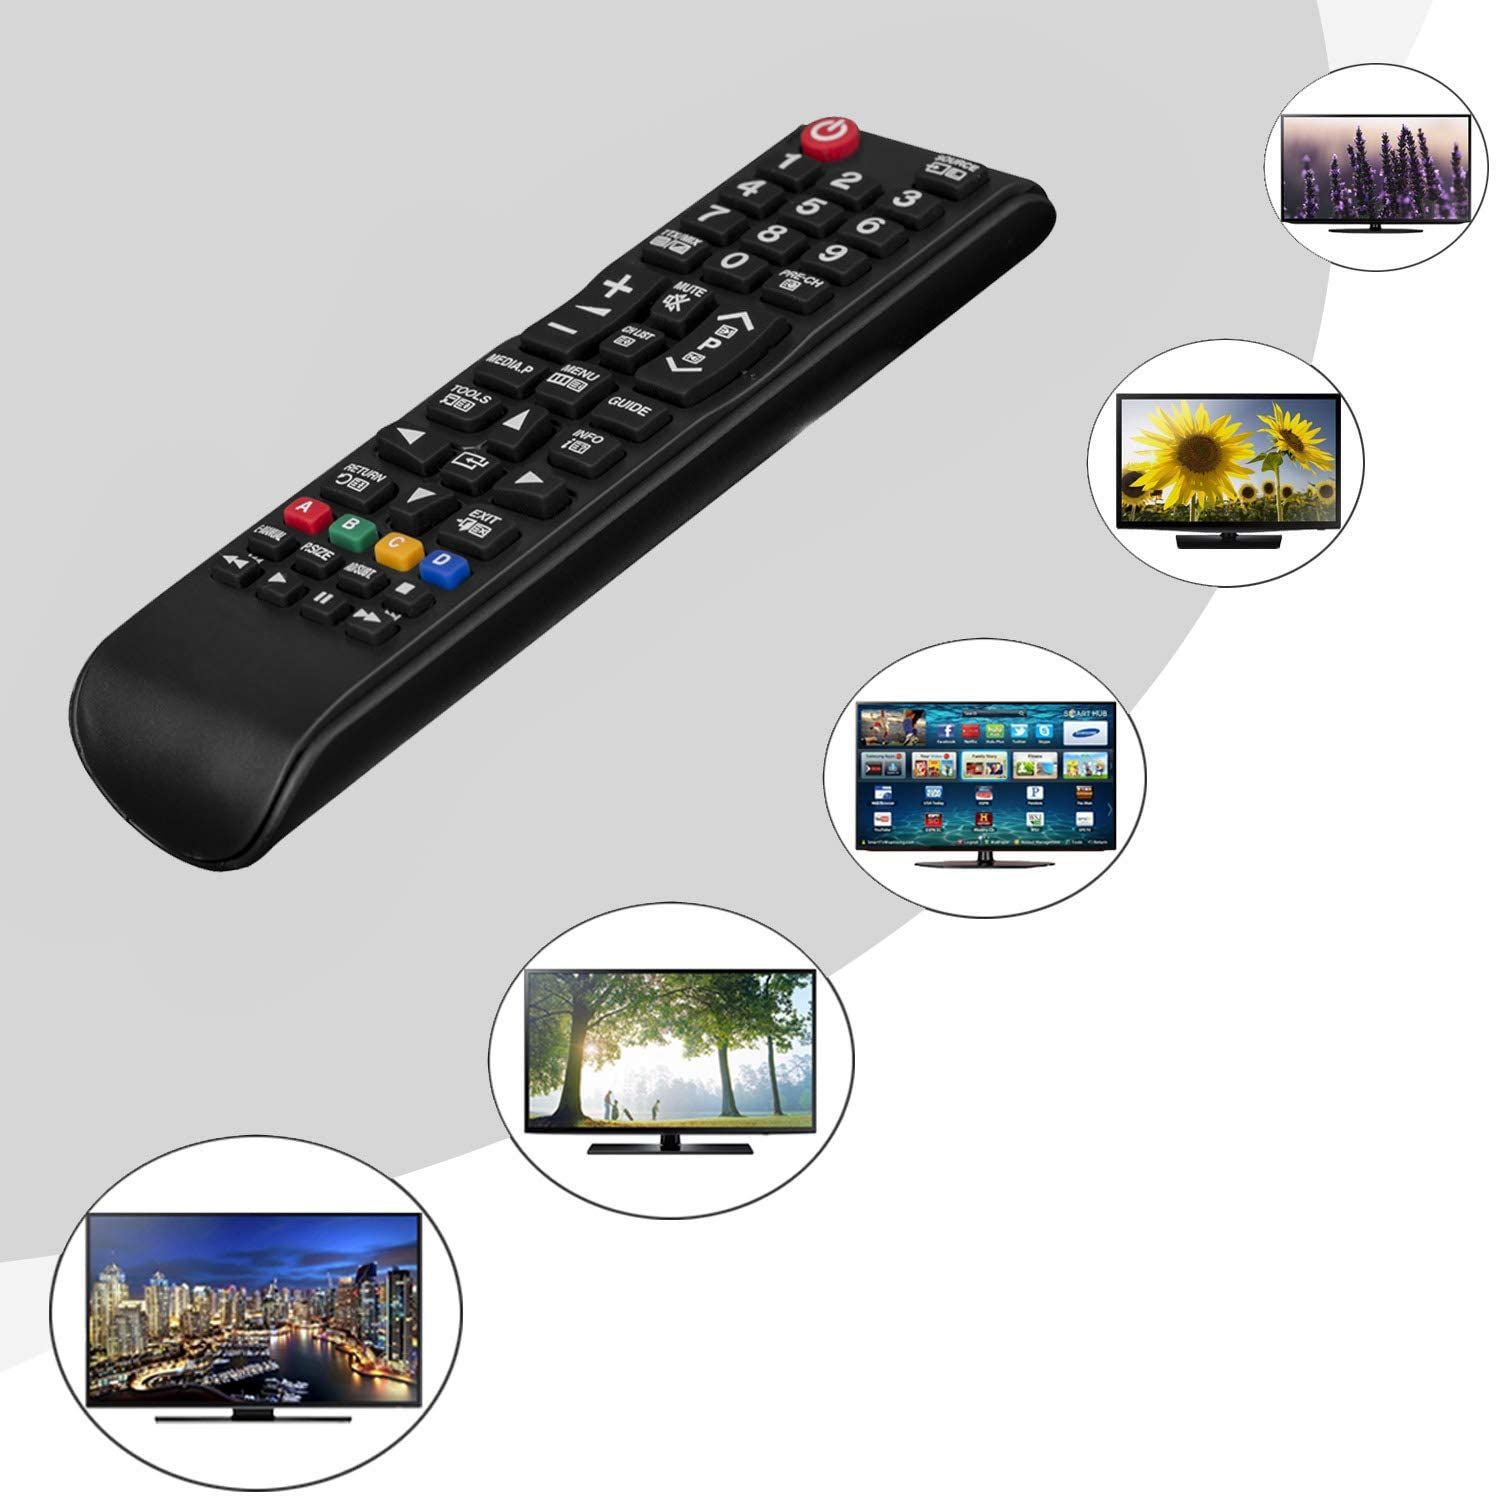 Angrox universal remote control c